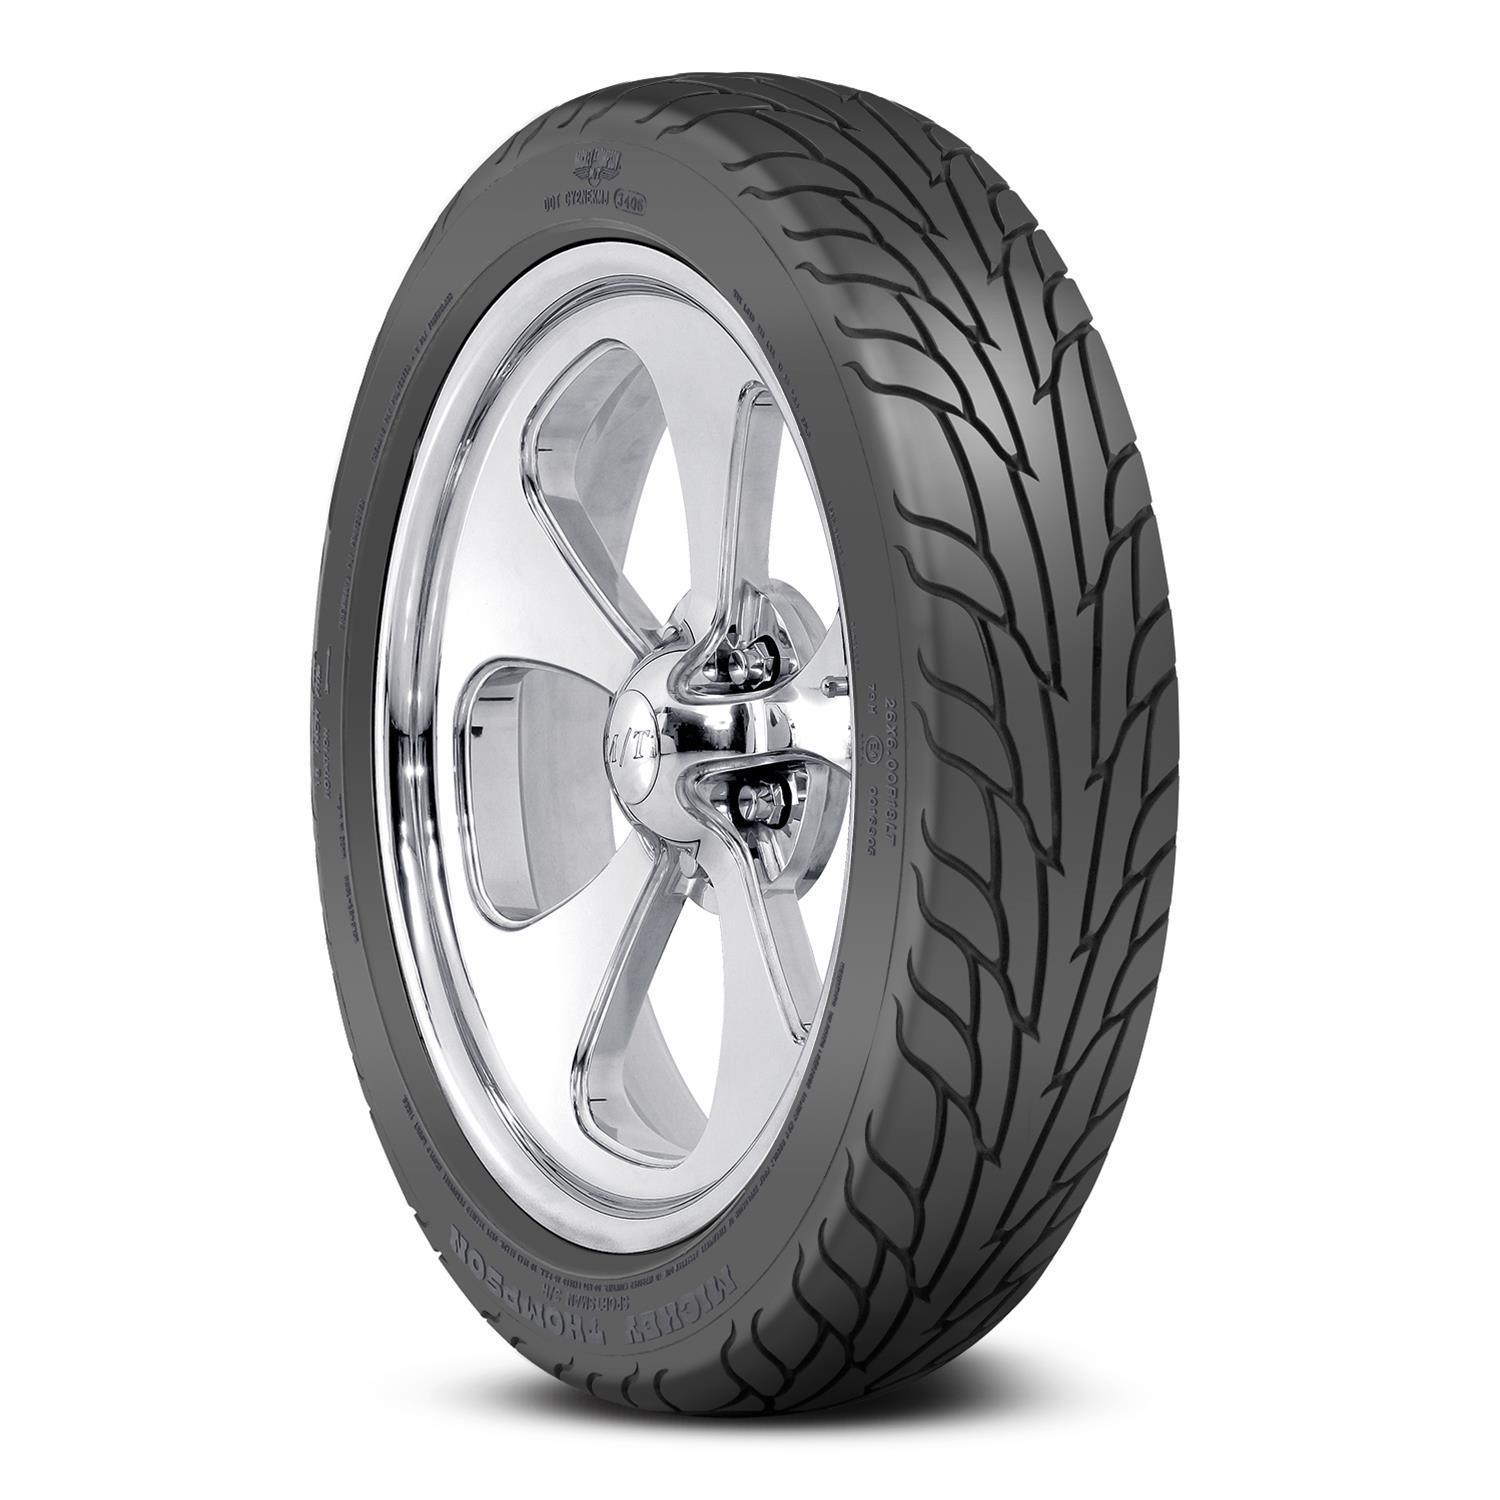 28x6.00R18LT Sportsman S/R Front Tire - Burlile Performance Products